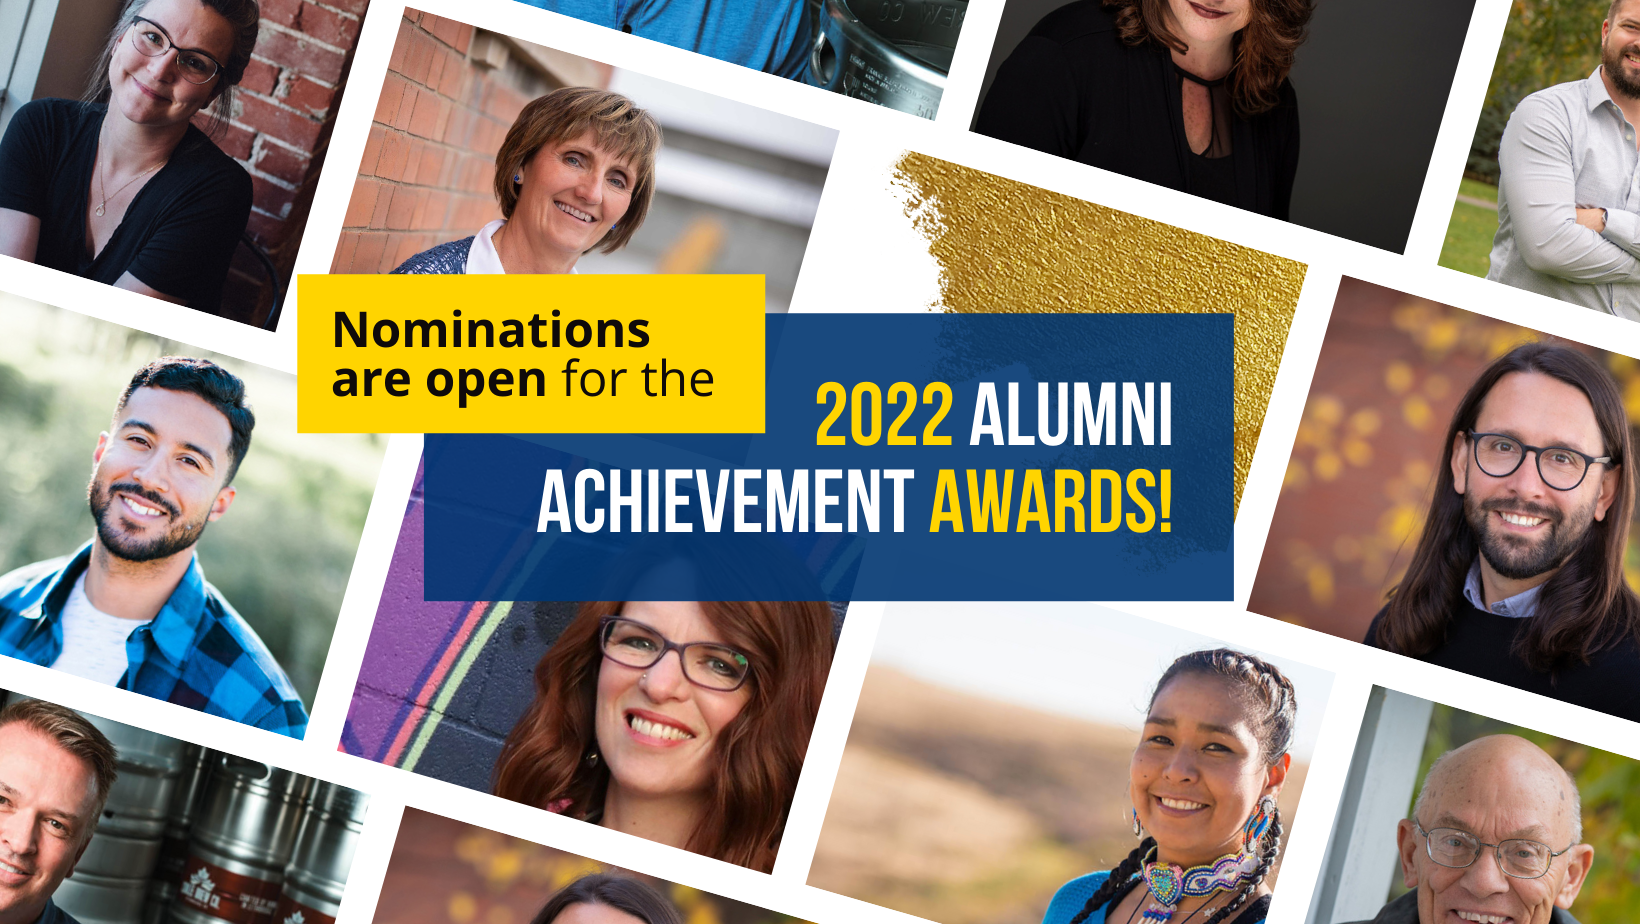 alumni achievement award nominations are now open